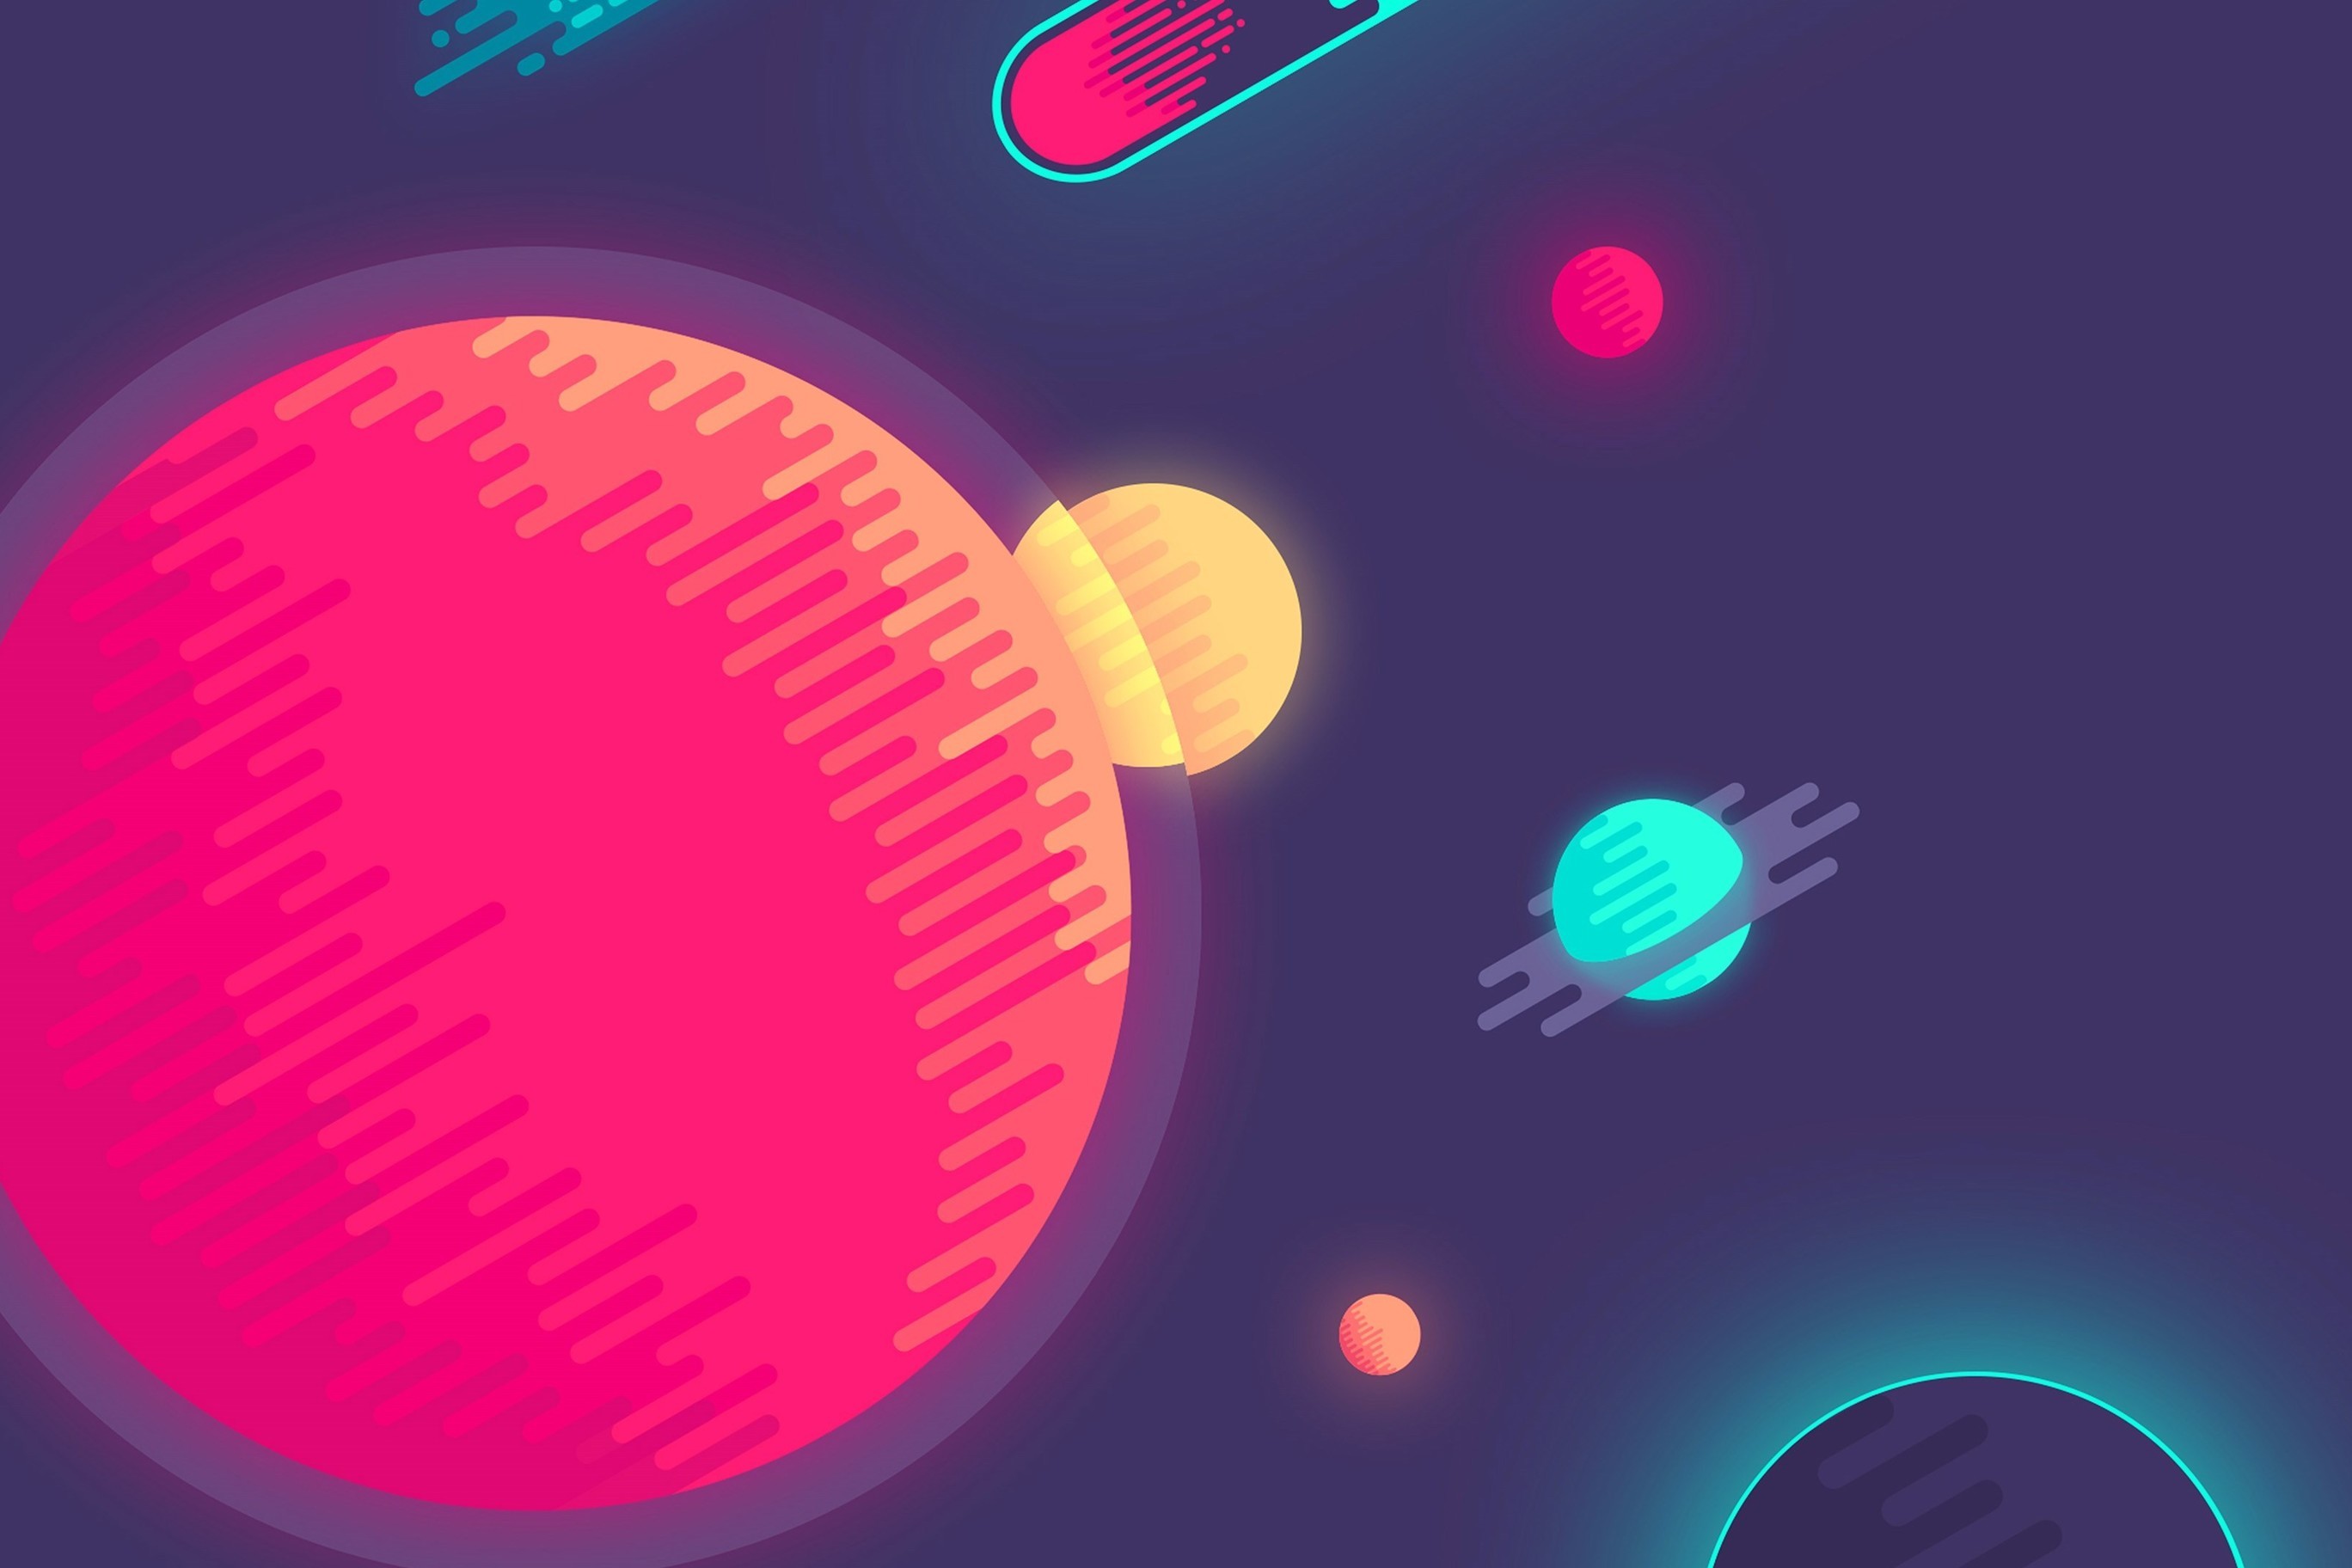 Wallpaper - Cartoon Space Desktop Backgrounds - 2736x1824 Wallpaper -  